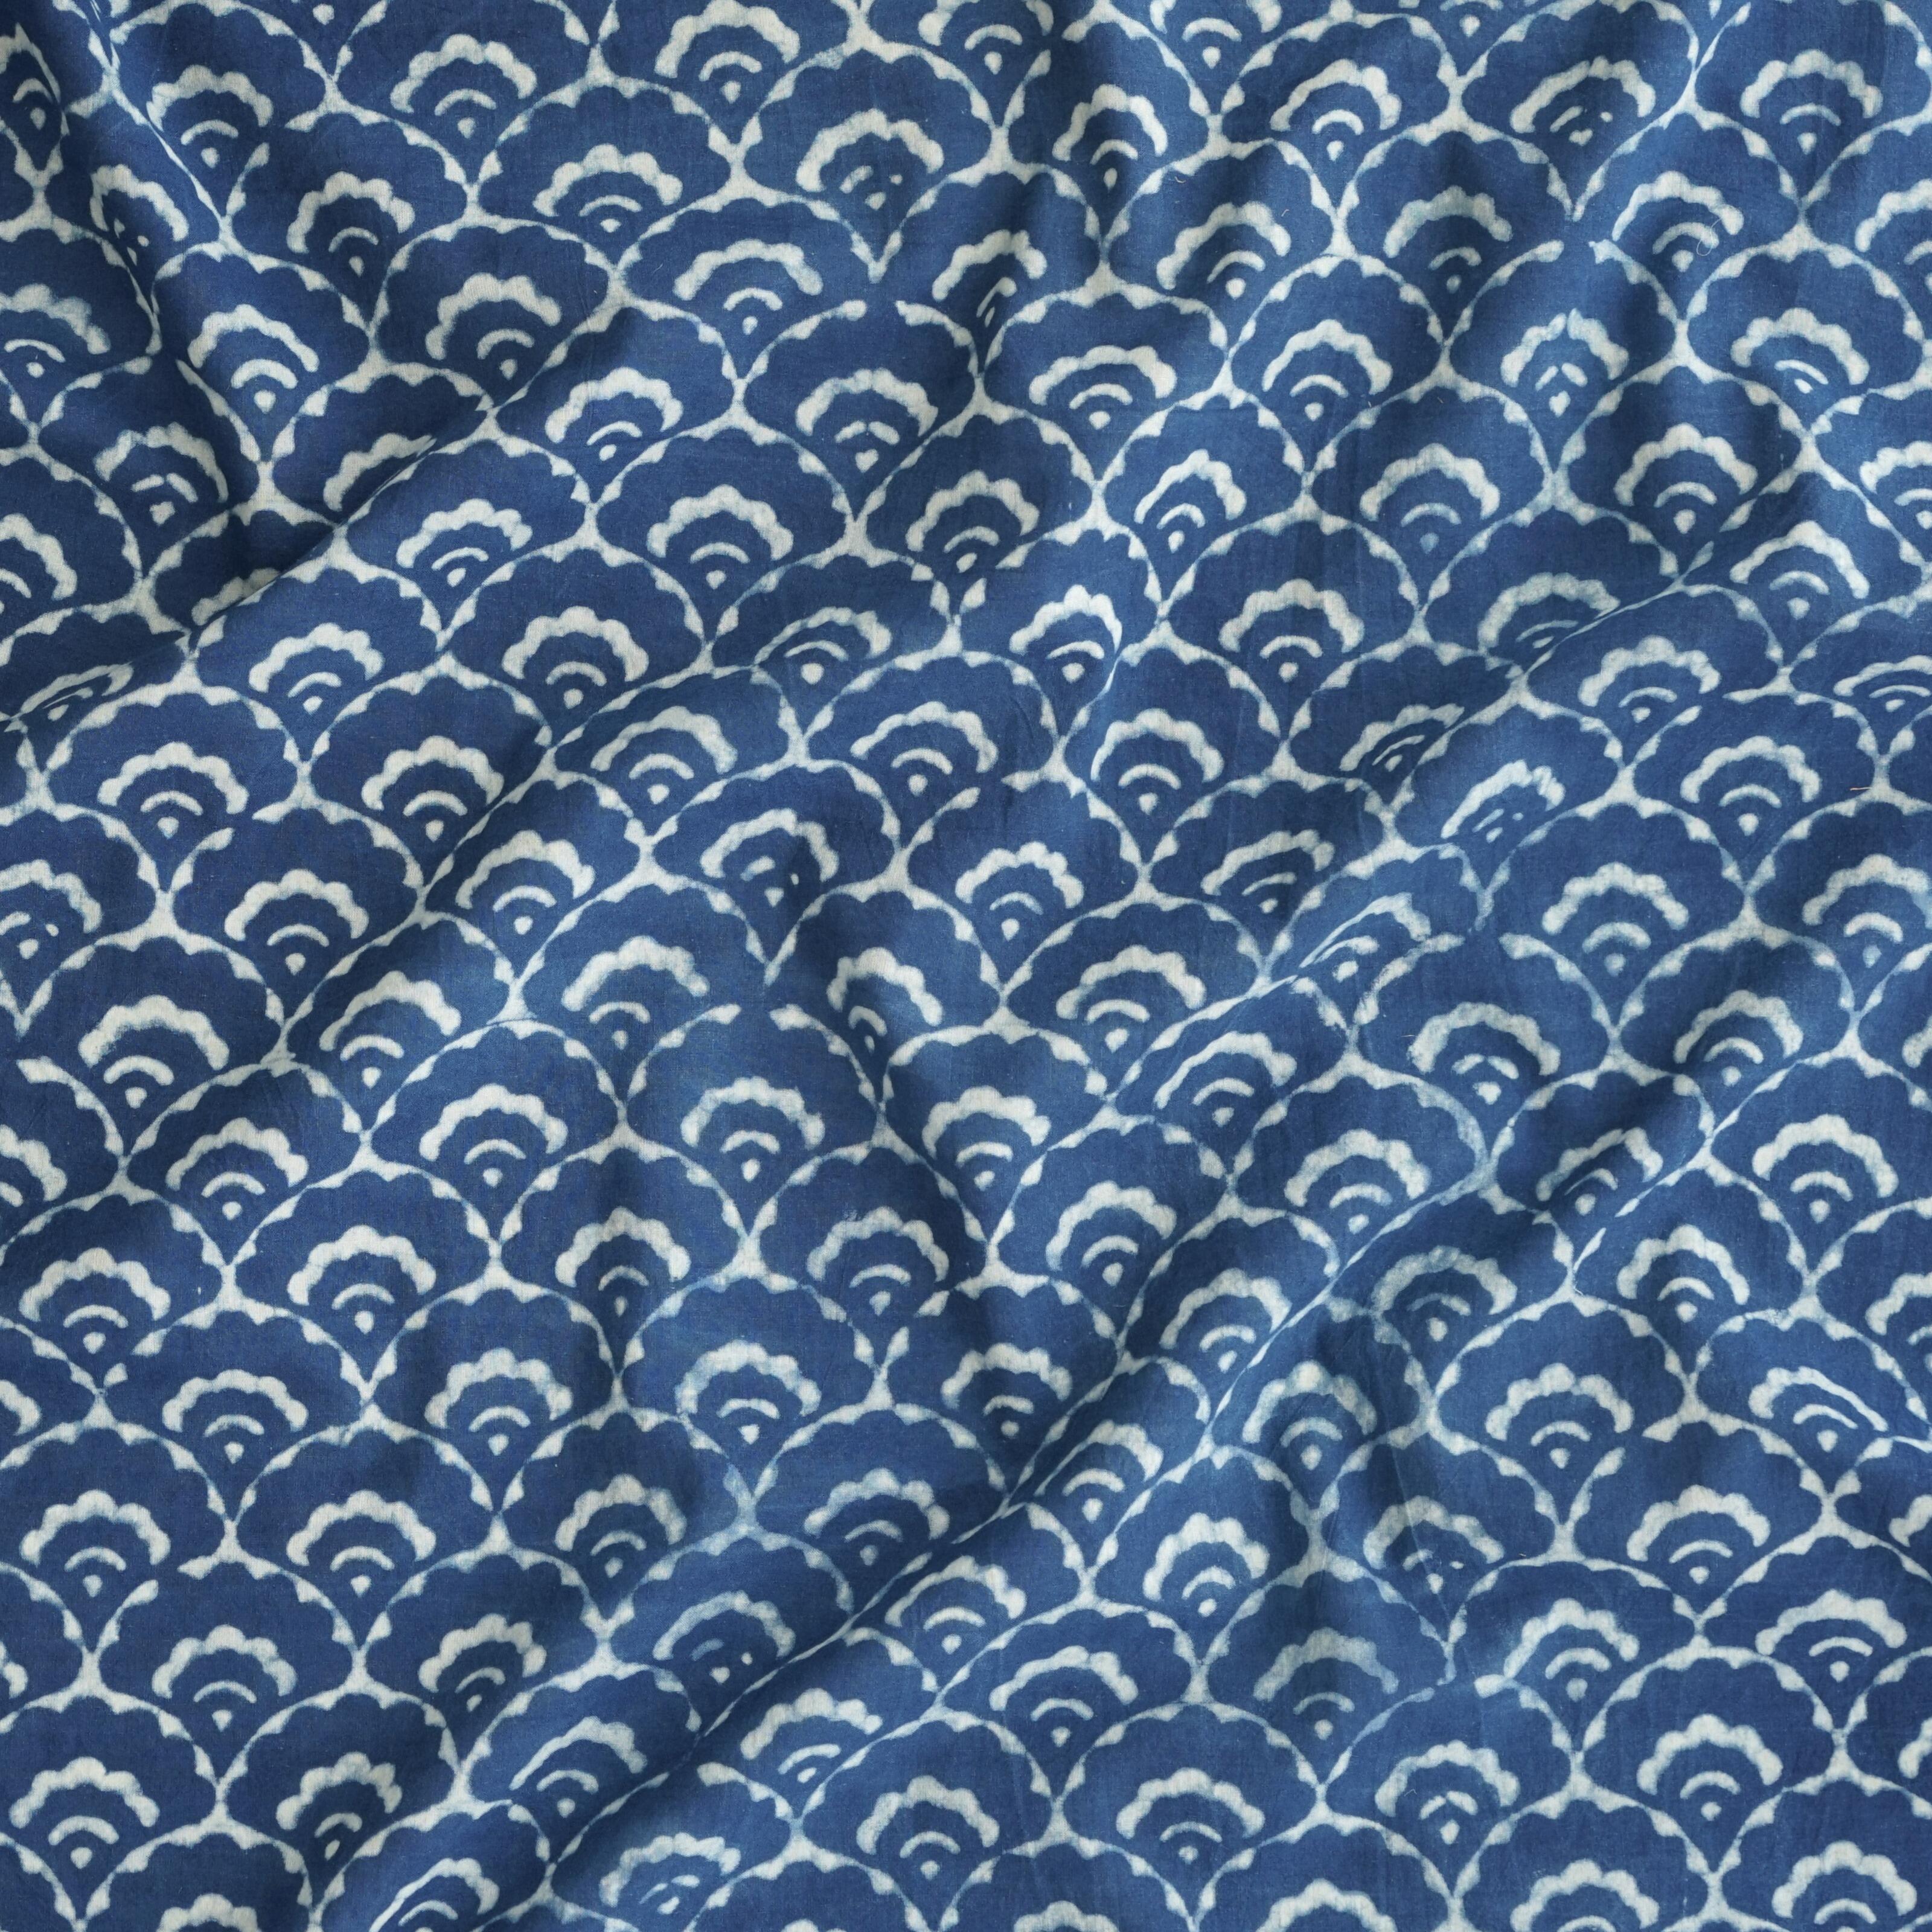 1 - AHM19 - Block-Printed Cloth - 100% Cotton Fabric - Indigo Dye - Abode of Clouds - Contrast